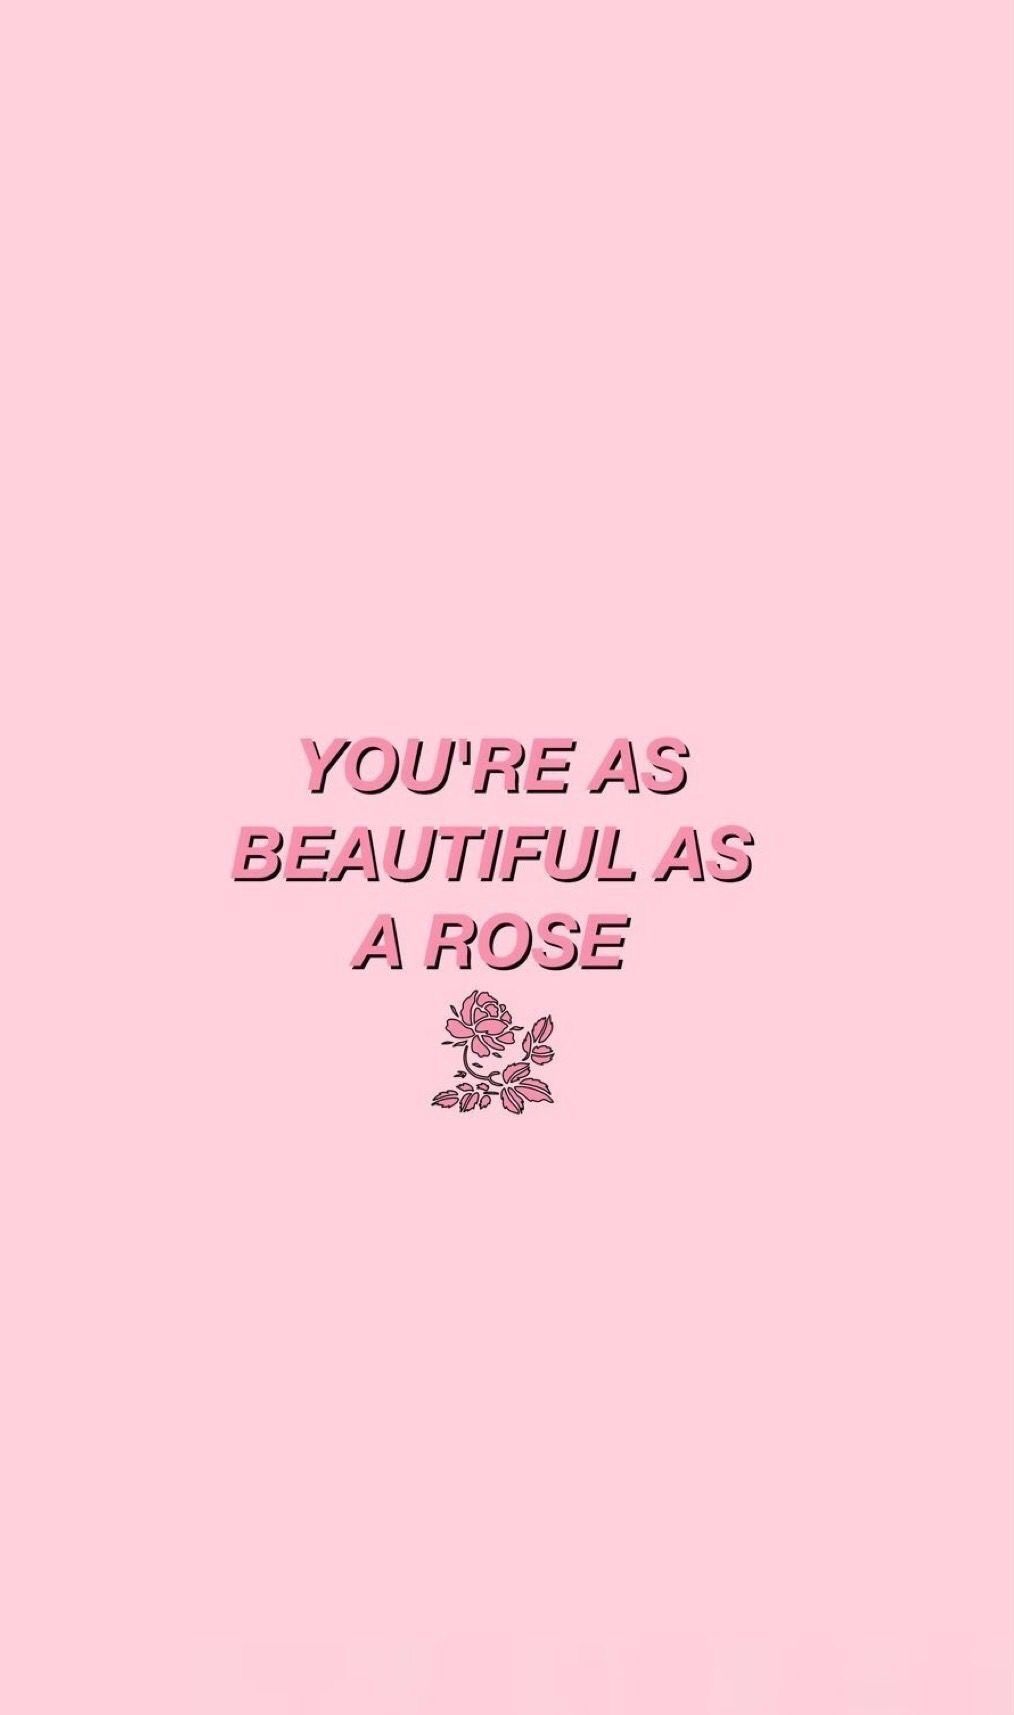 You are as beautiful a rose - Roses, pink, beautiful, iPhone, pastel, cute pink, cute, cute iPhone, pretty, pastel pink, pink phone, light pink, bestie, hot pink